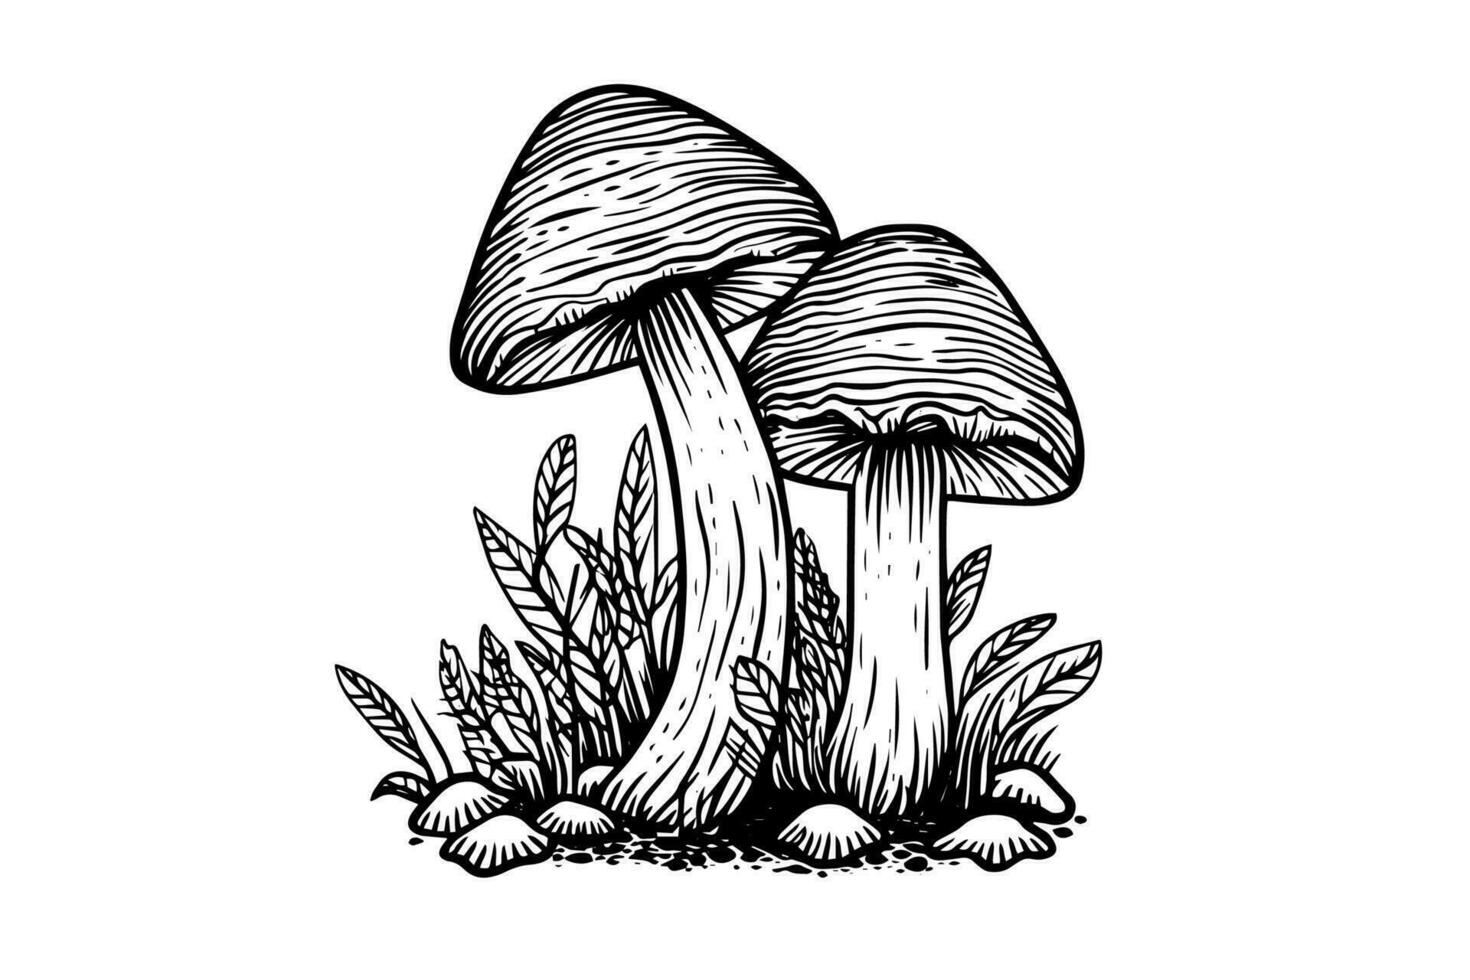 vlieg agaric of amanita champignons groep groeit in gras gravure stijl. vector illustratie.